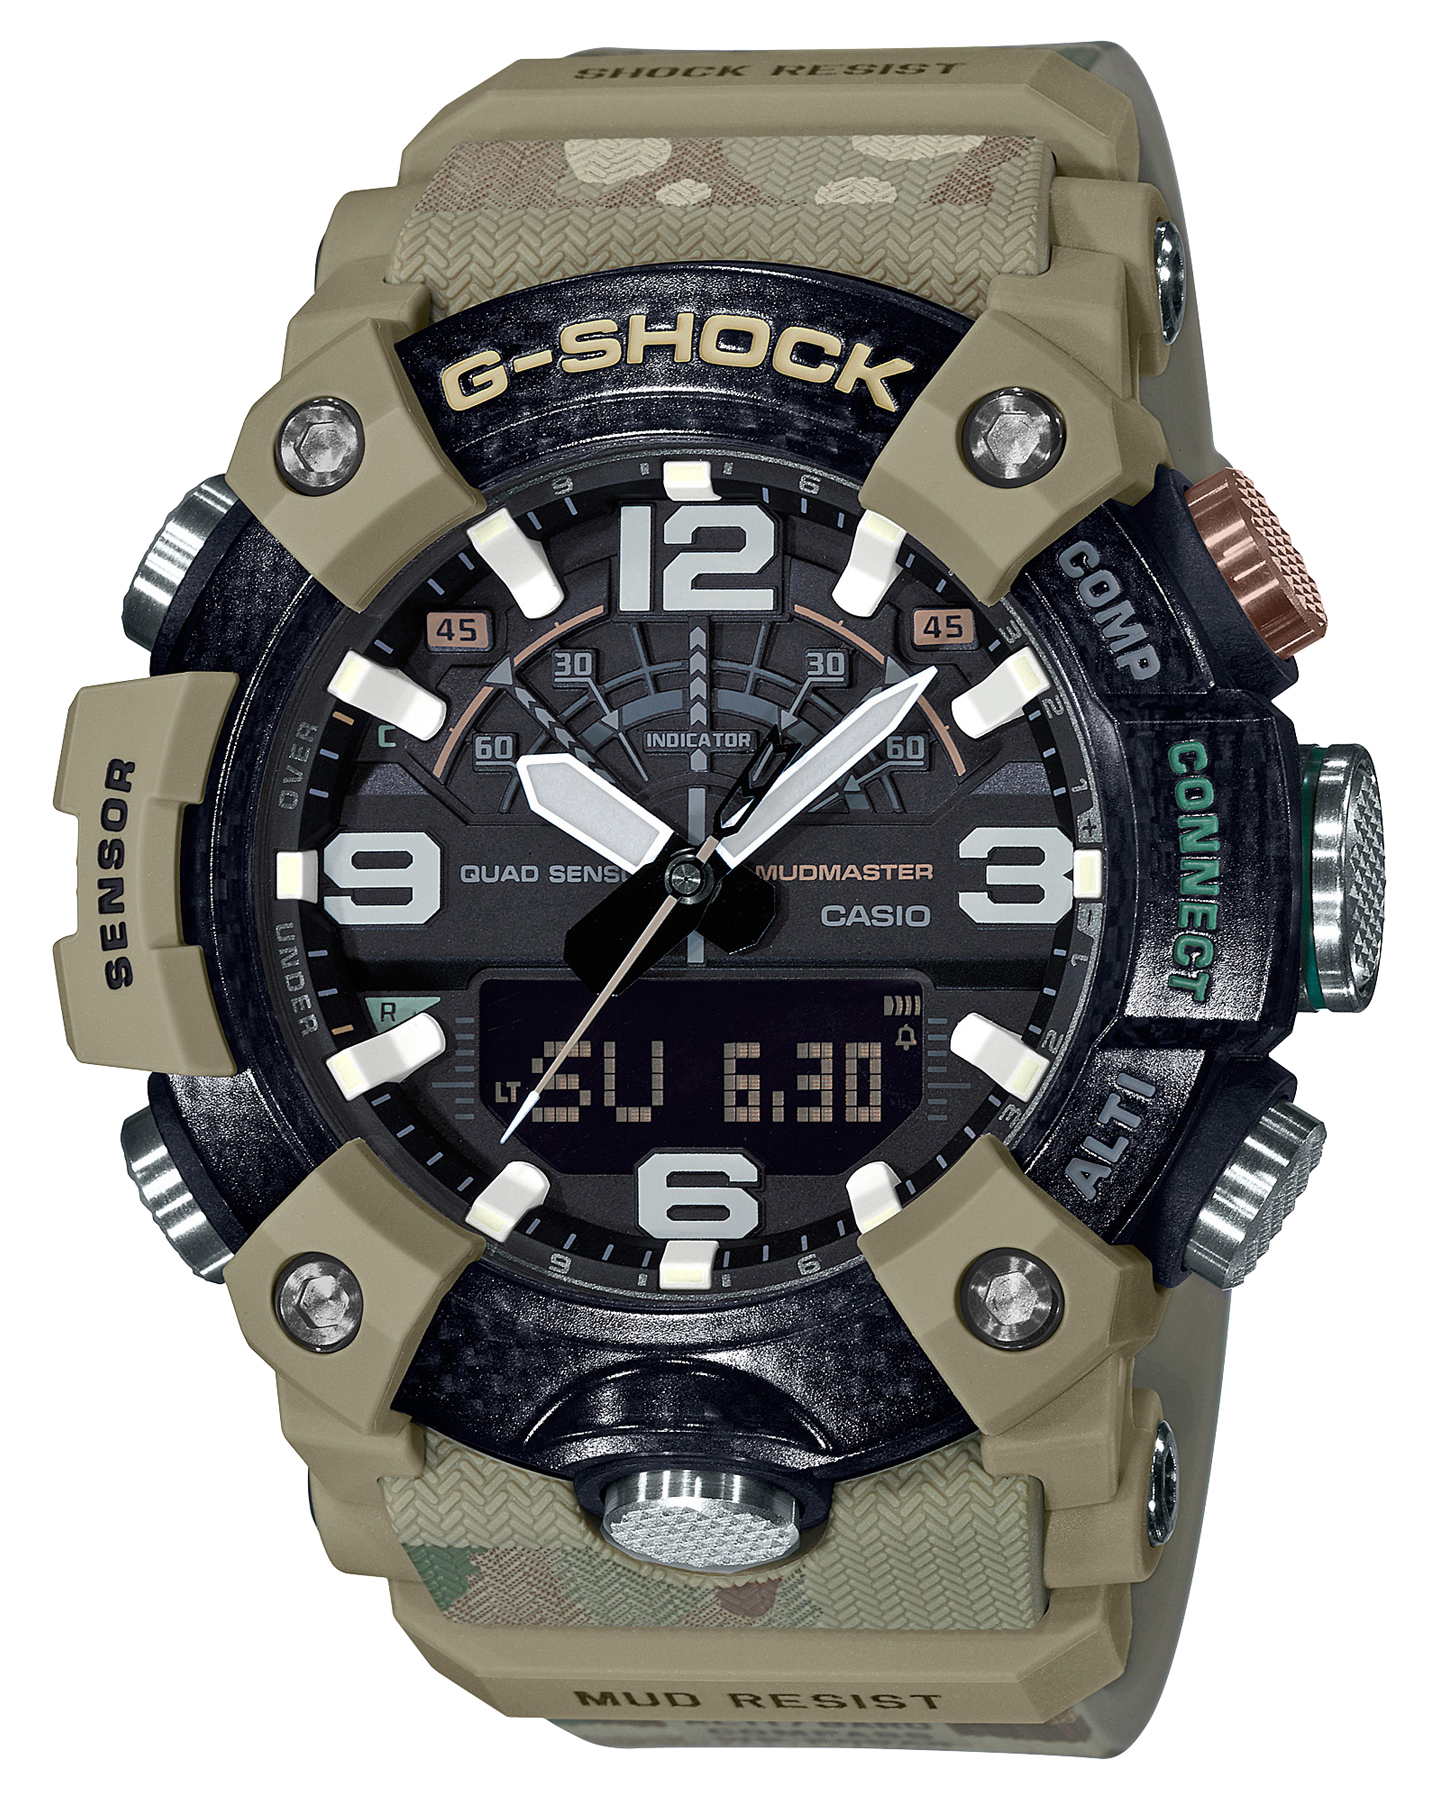  G Shock Limited Edition  British Army Mudmaster Watch 